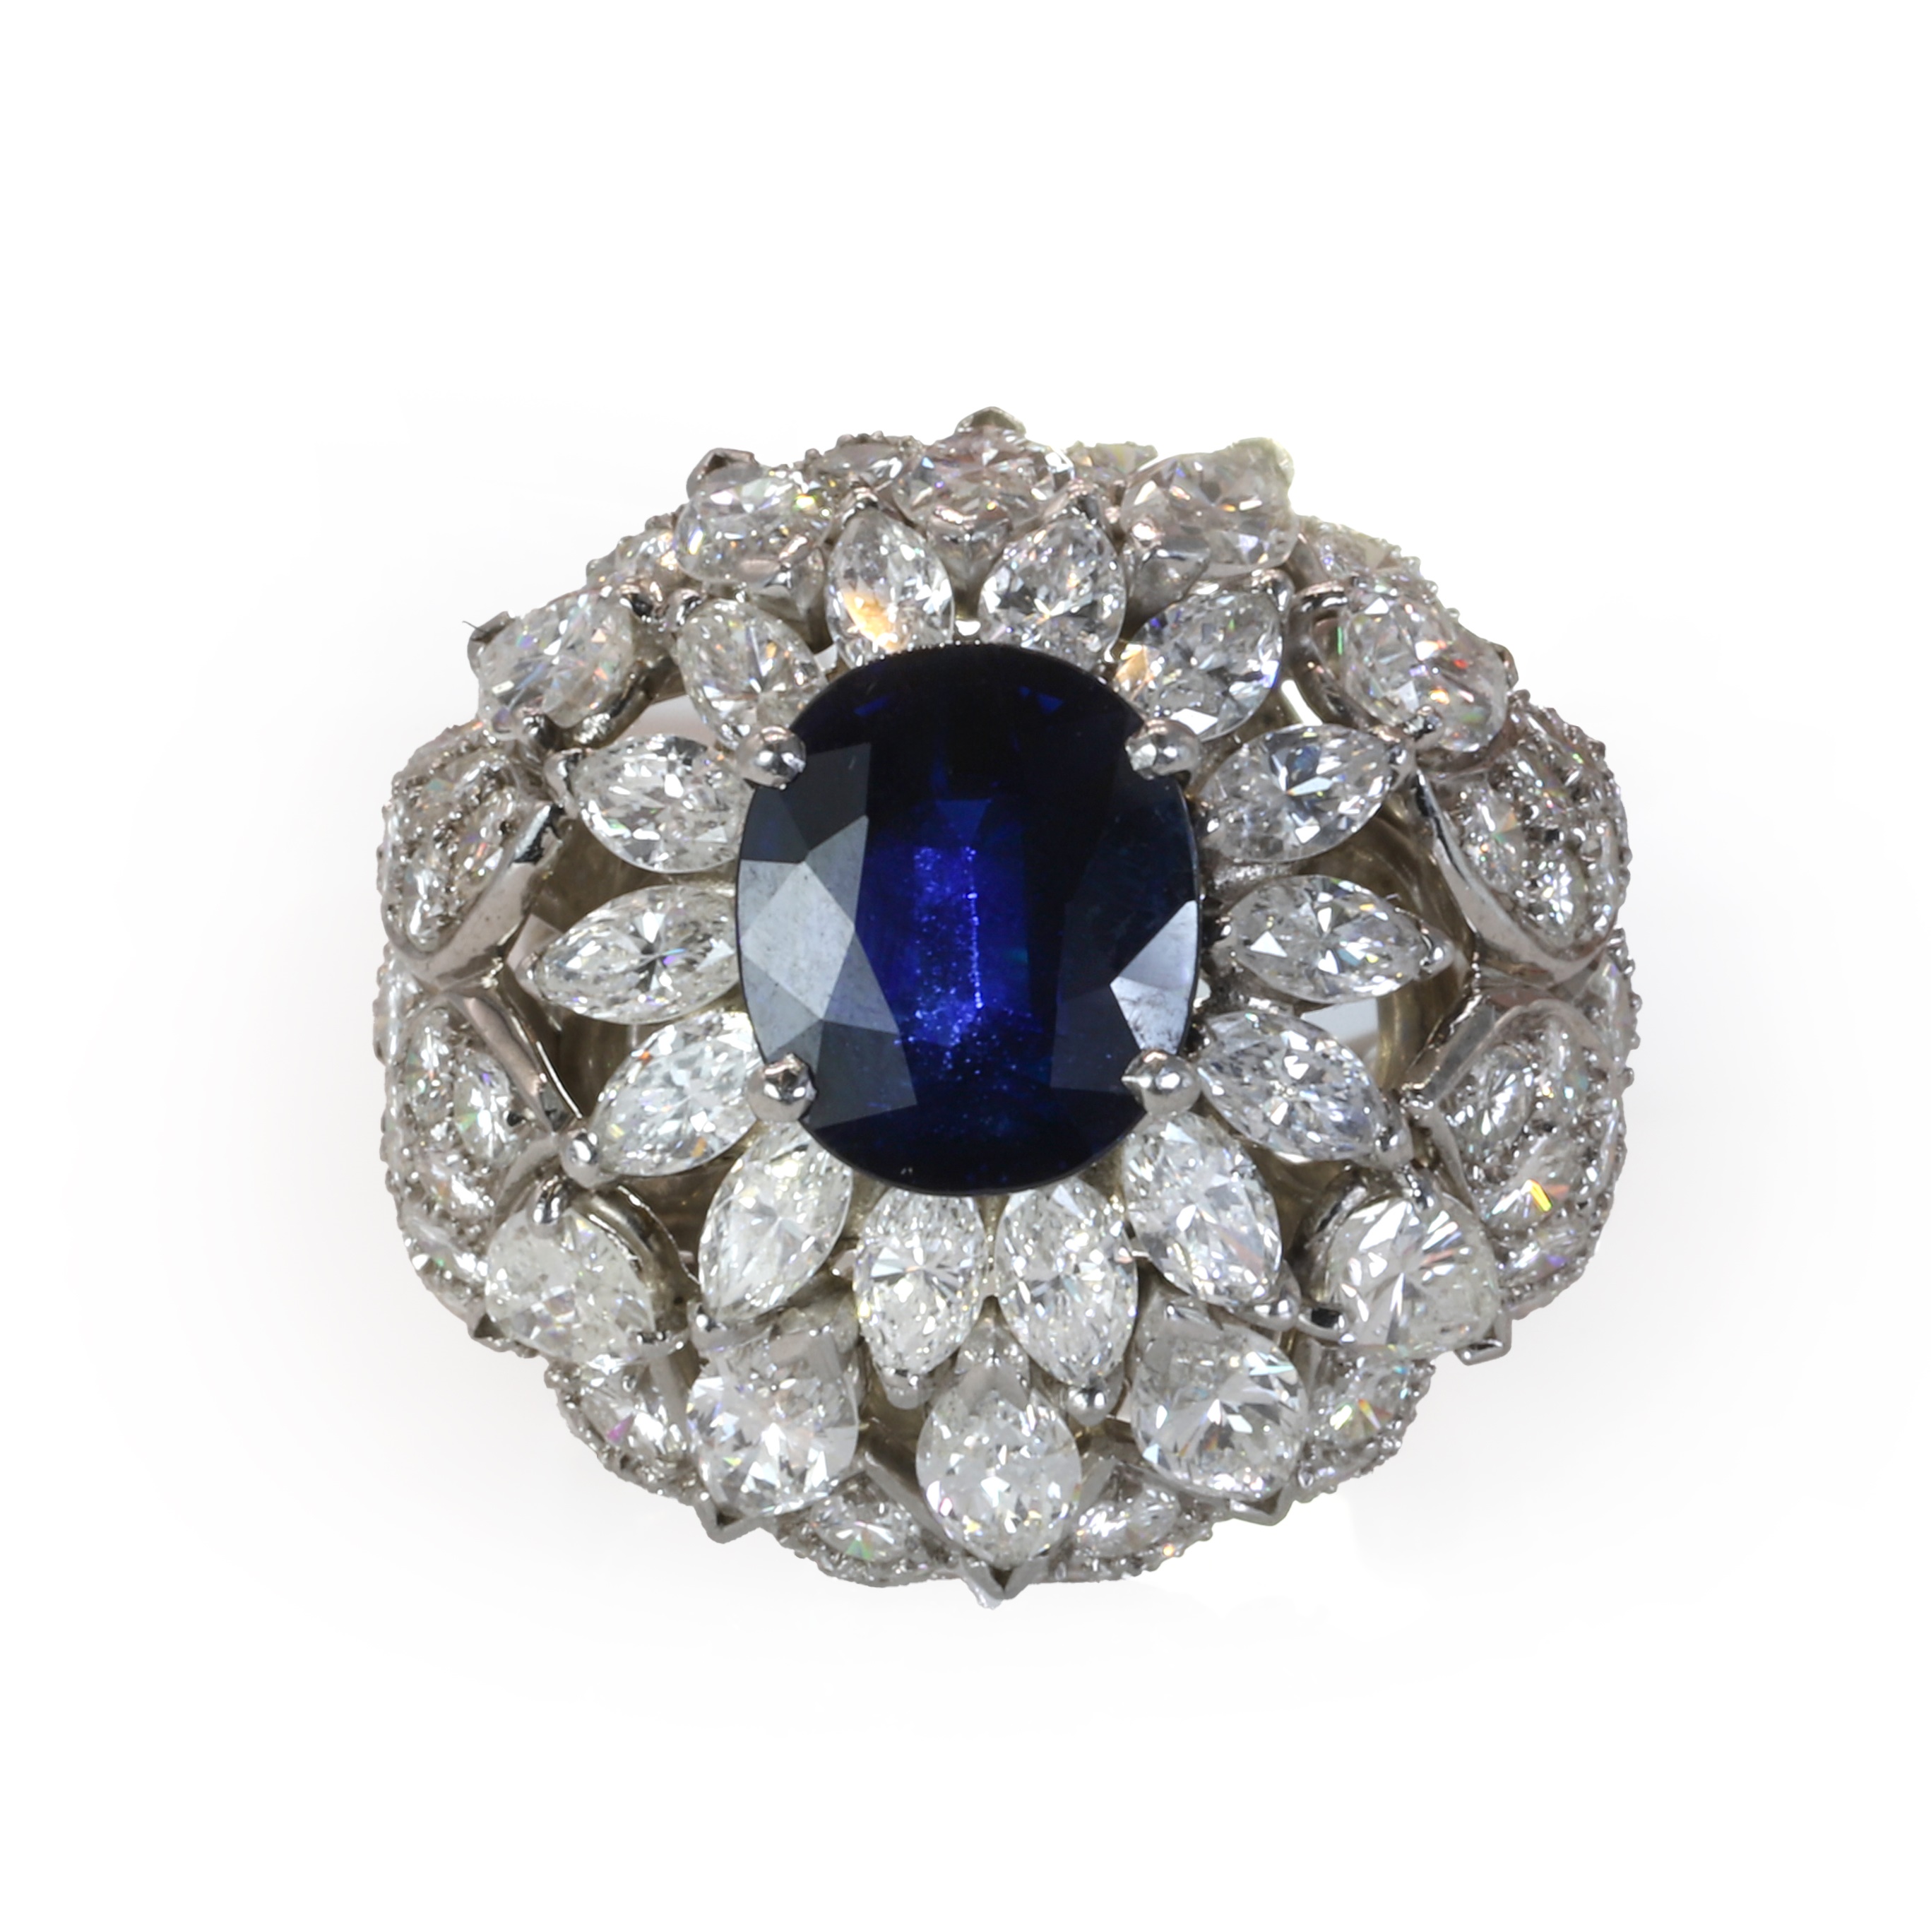 A mid 20th century sapphire and diamond bombé ring (£3,000-4,000)